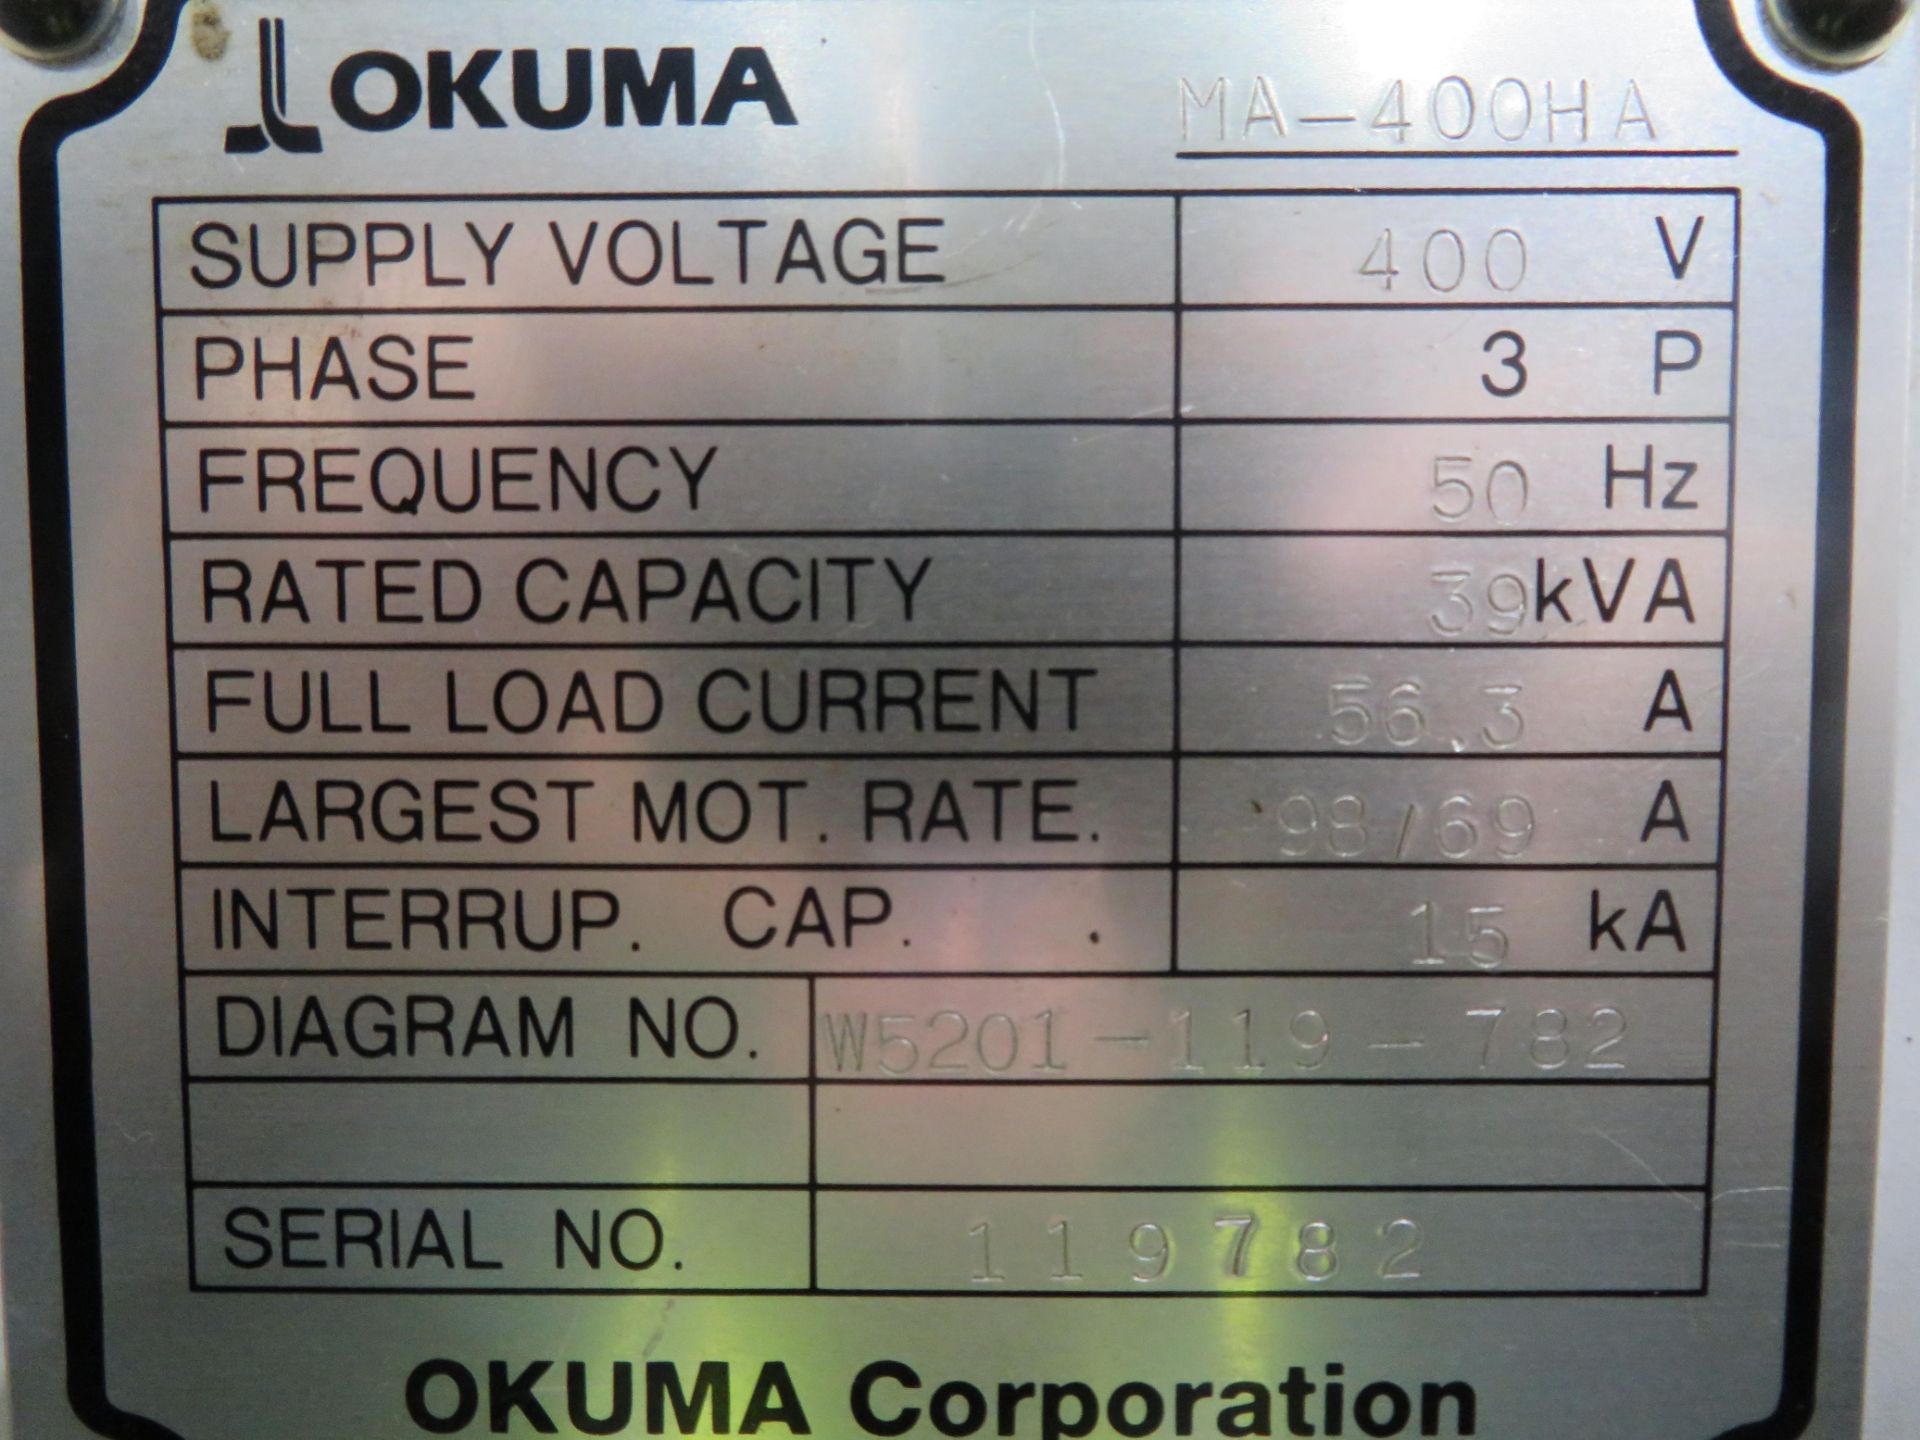 Okuma MA-400HA Horizontal Machining Centre - Image 3 of 7